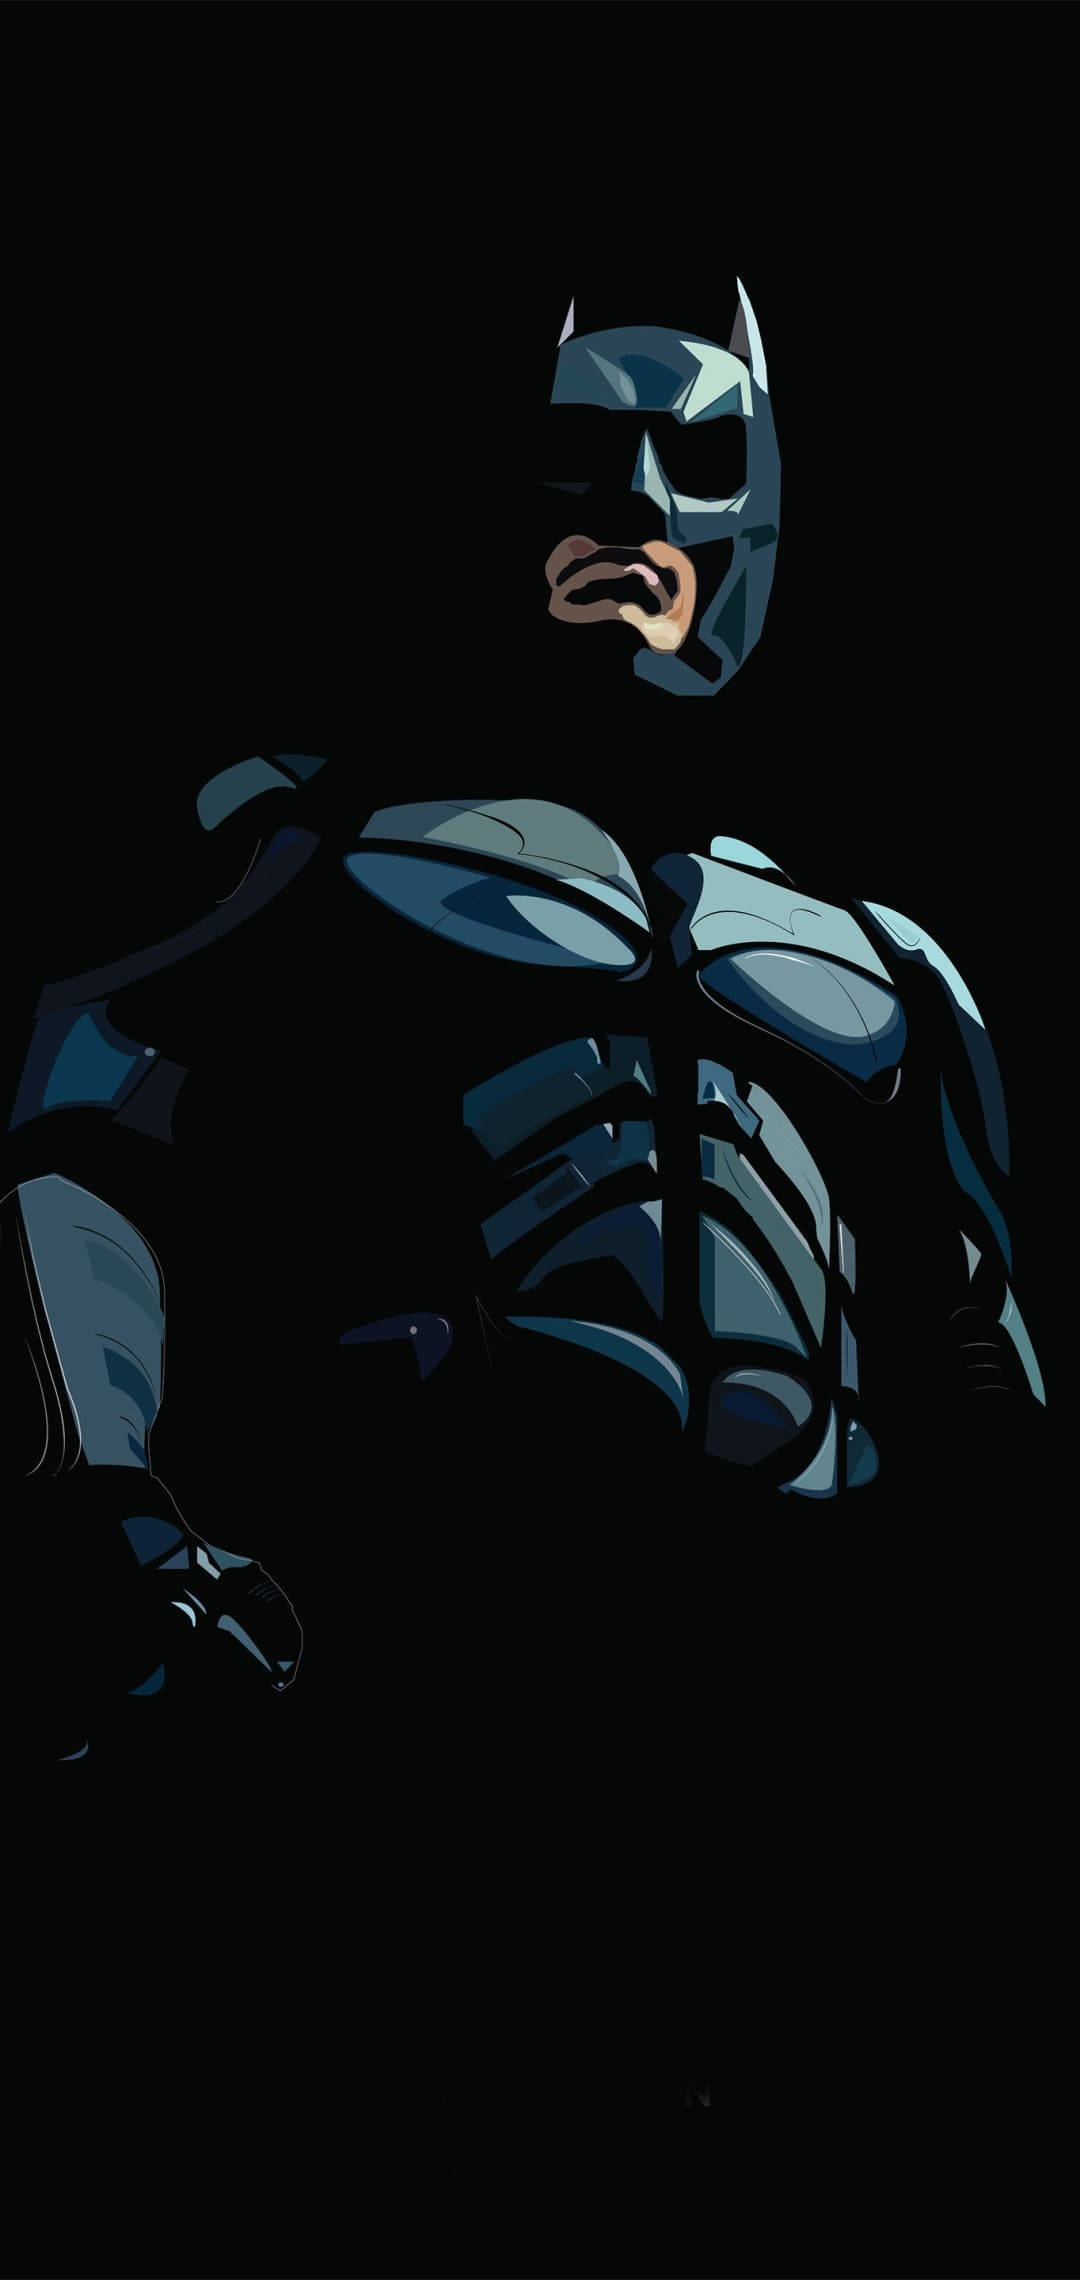 Batman Digital Artwork iPhone X Wallpaper